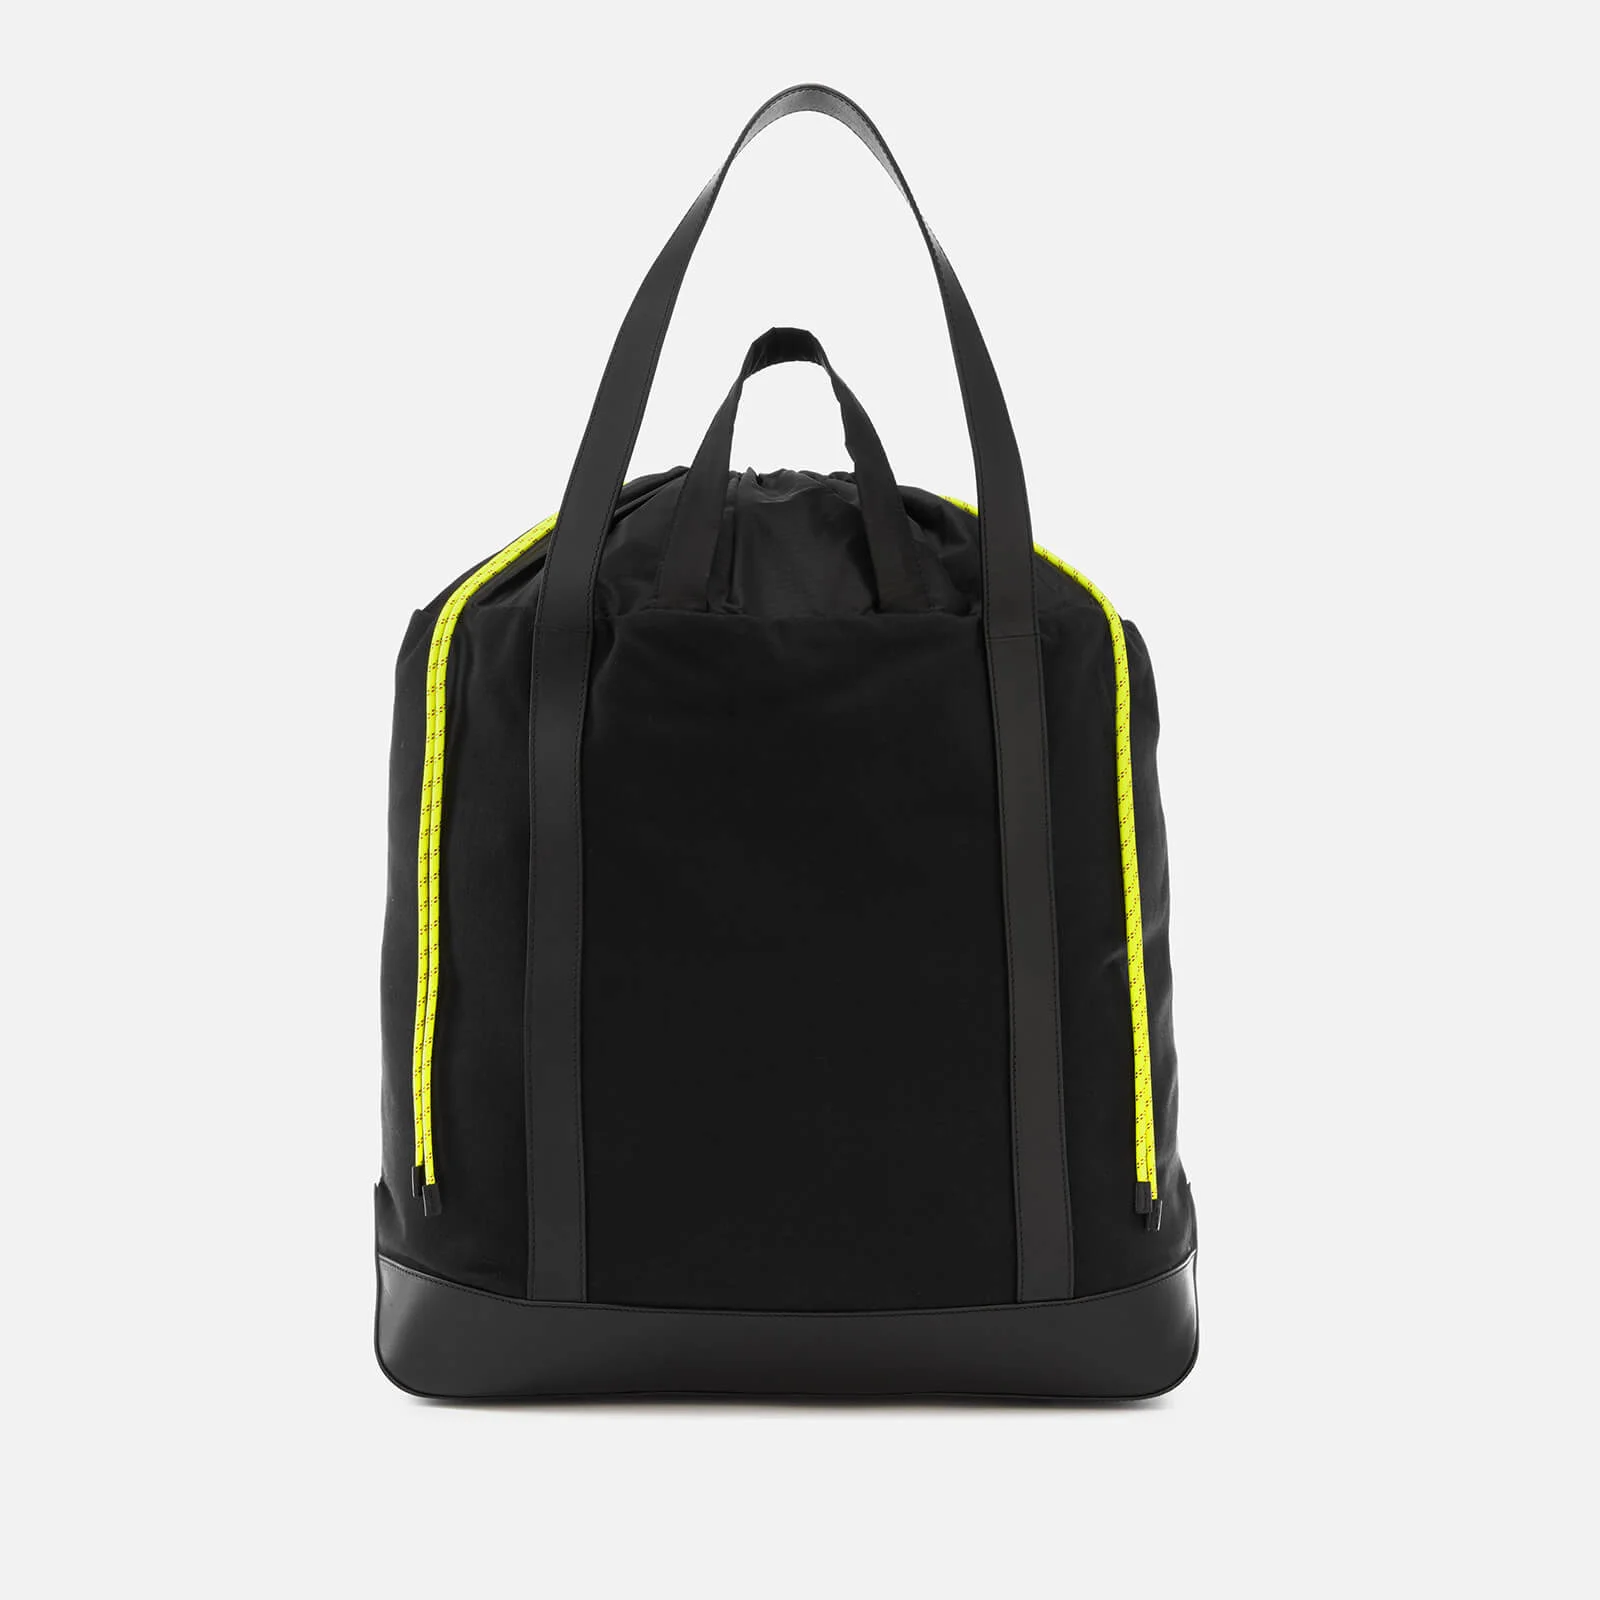 Maison Margiela Men's Shopper Bag - Black Image 1